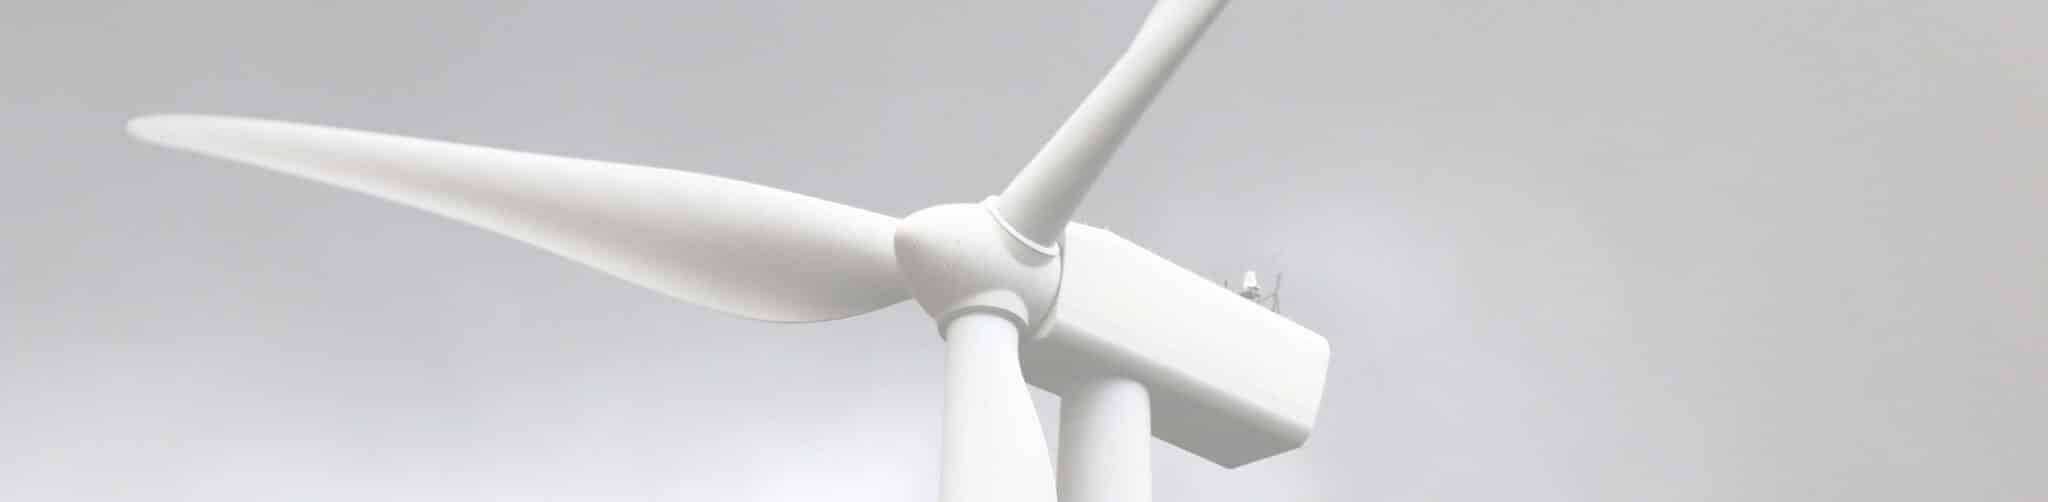 Cabecera sector eolico alargada transparencia 40 scaled À propos de Windbotix